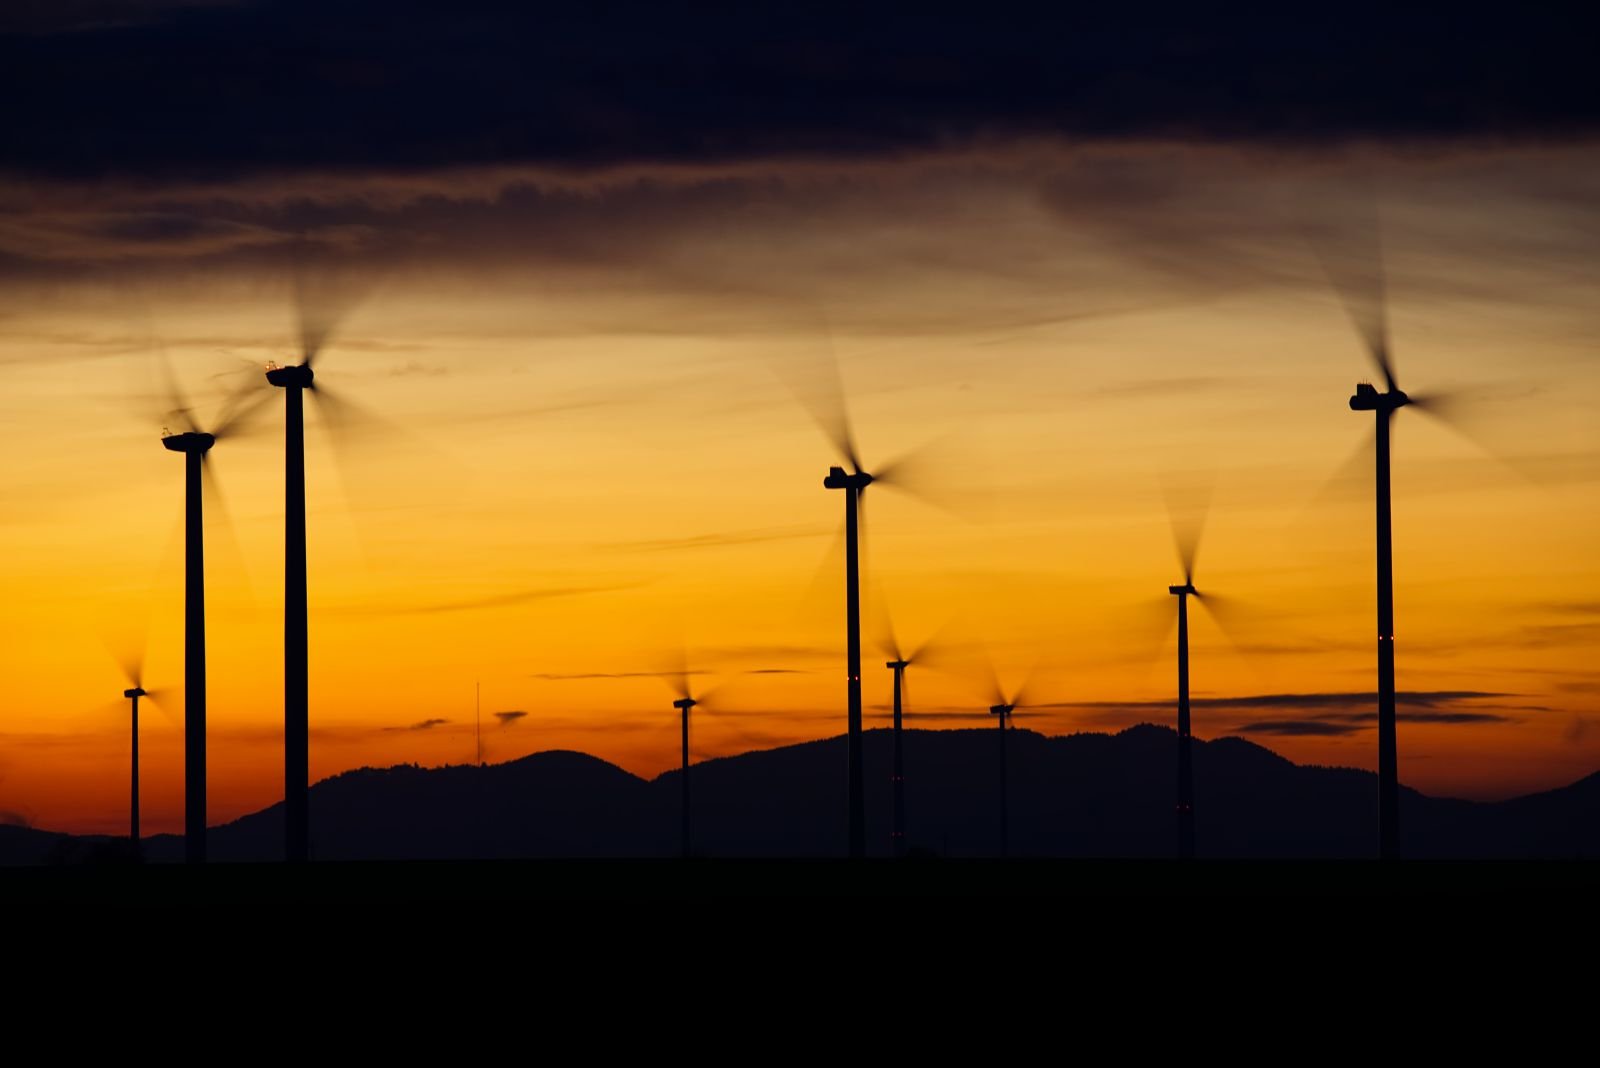 More information about "Νέα έκθεση: Η ενέργεια από ανανεώσιμες φθηνότερη από τα ορυκτά καύσιμα"